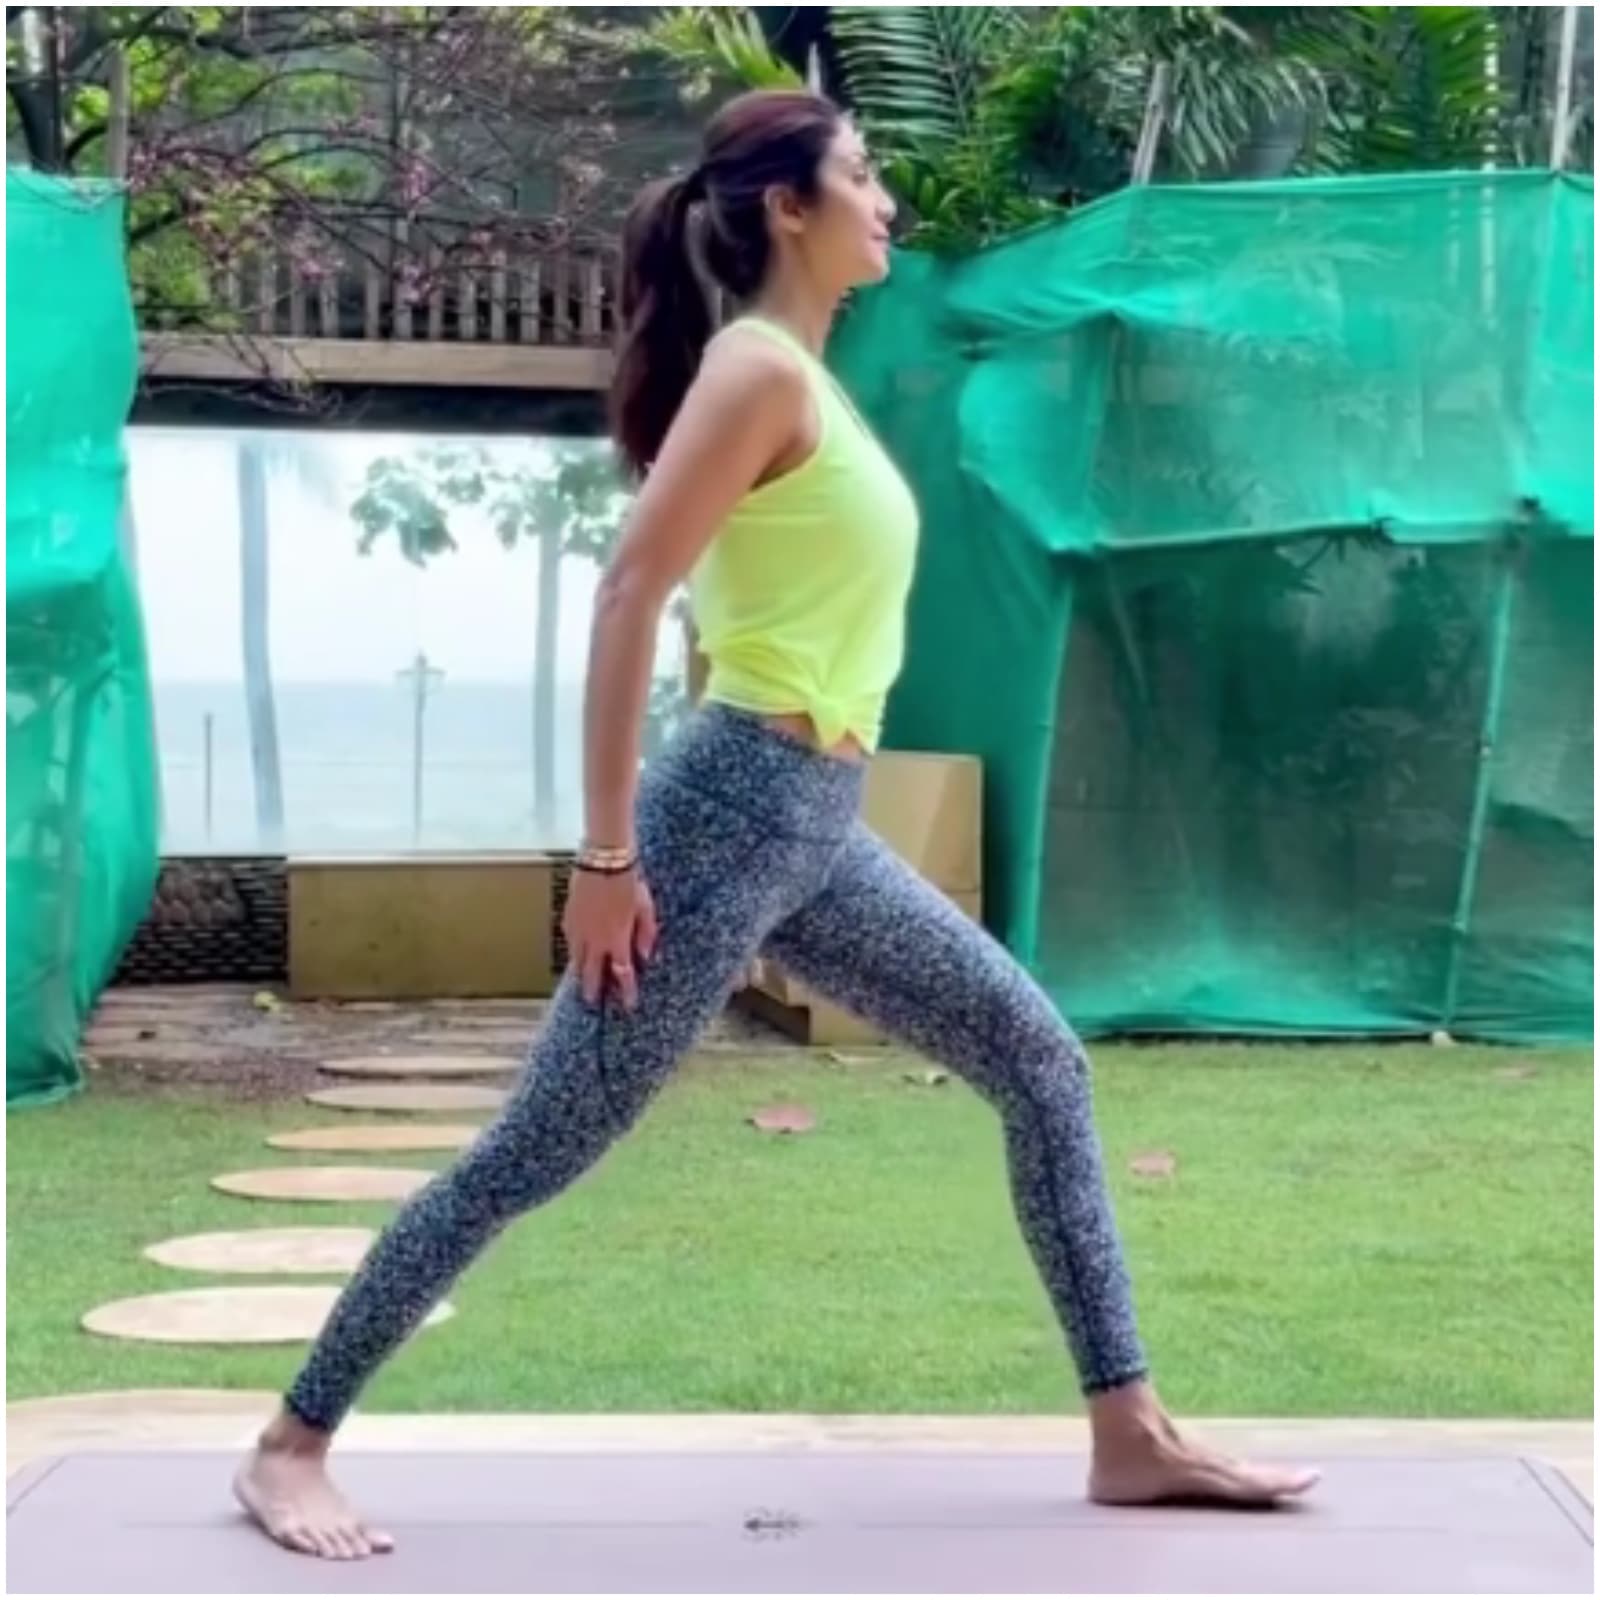 Shilpa Shetty Sex Blue Film - Watch: Shilpa Shetty Shares Yoga Video with Empowering Message - News18